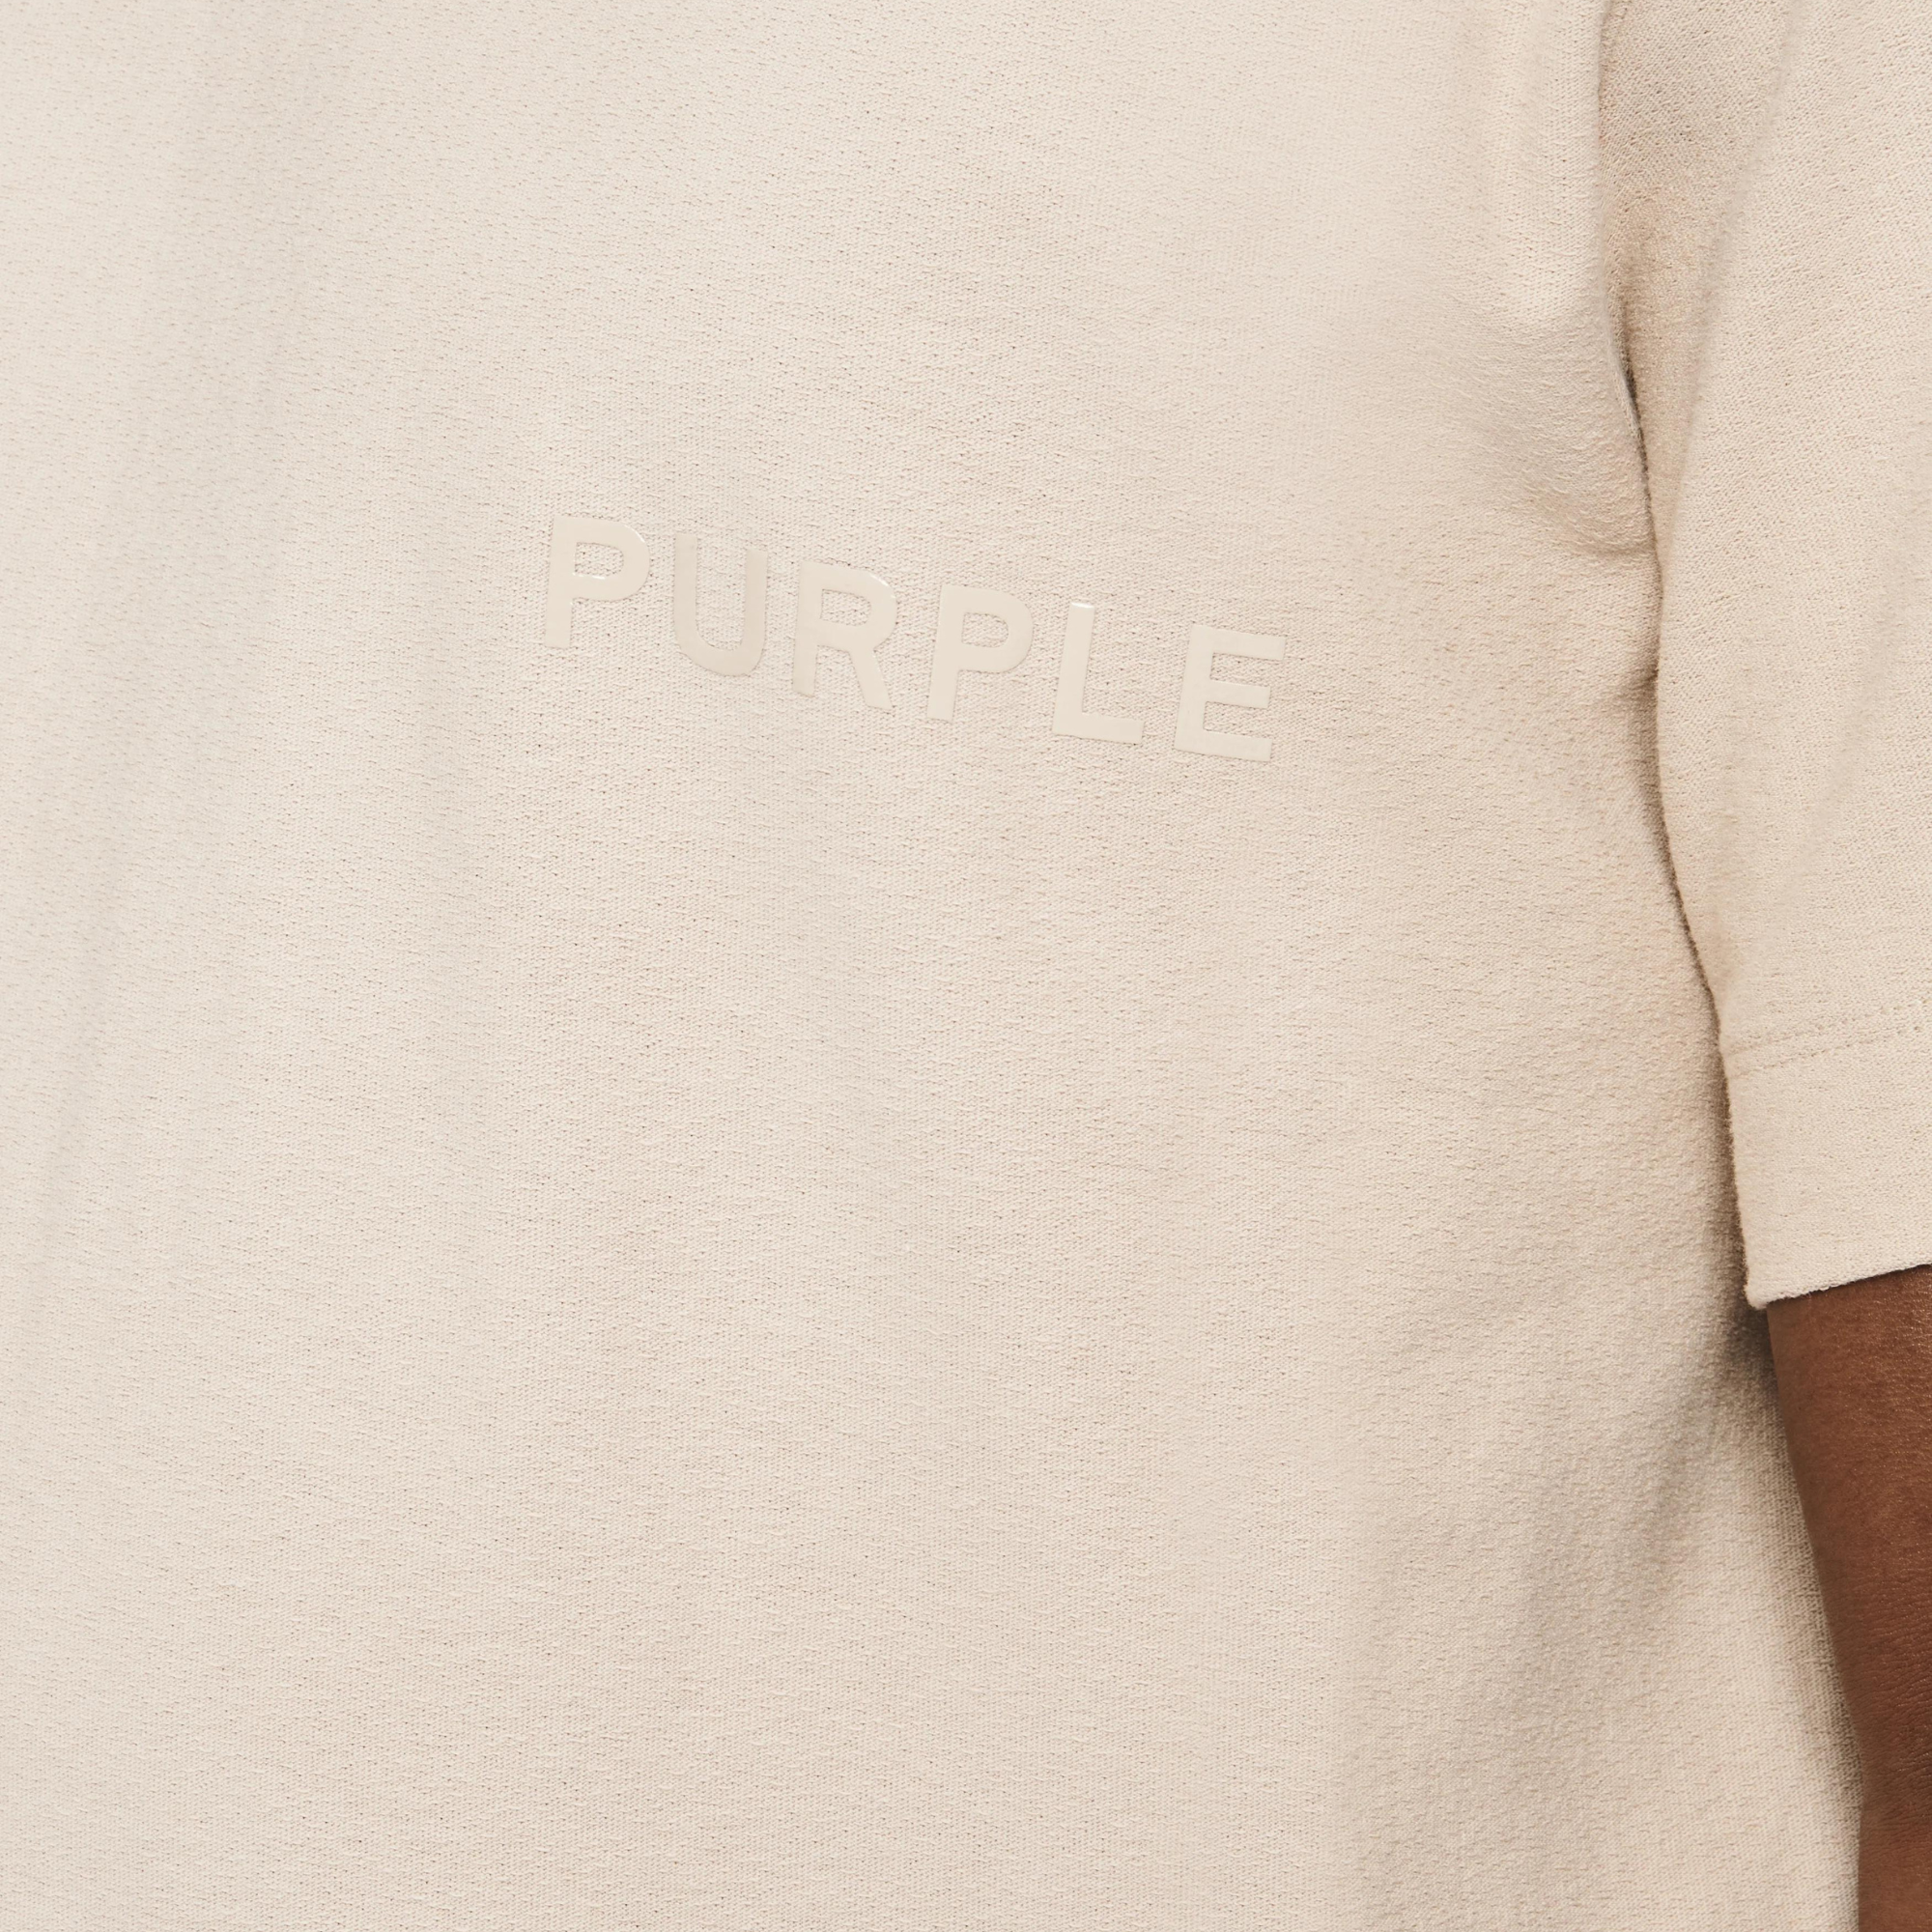 Purple Brand Brown World Wordmark T-Shirt